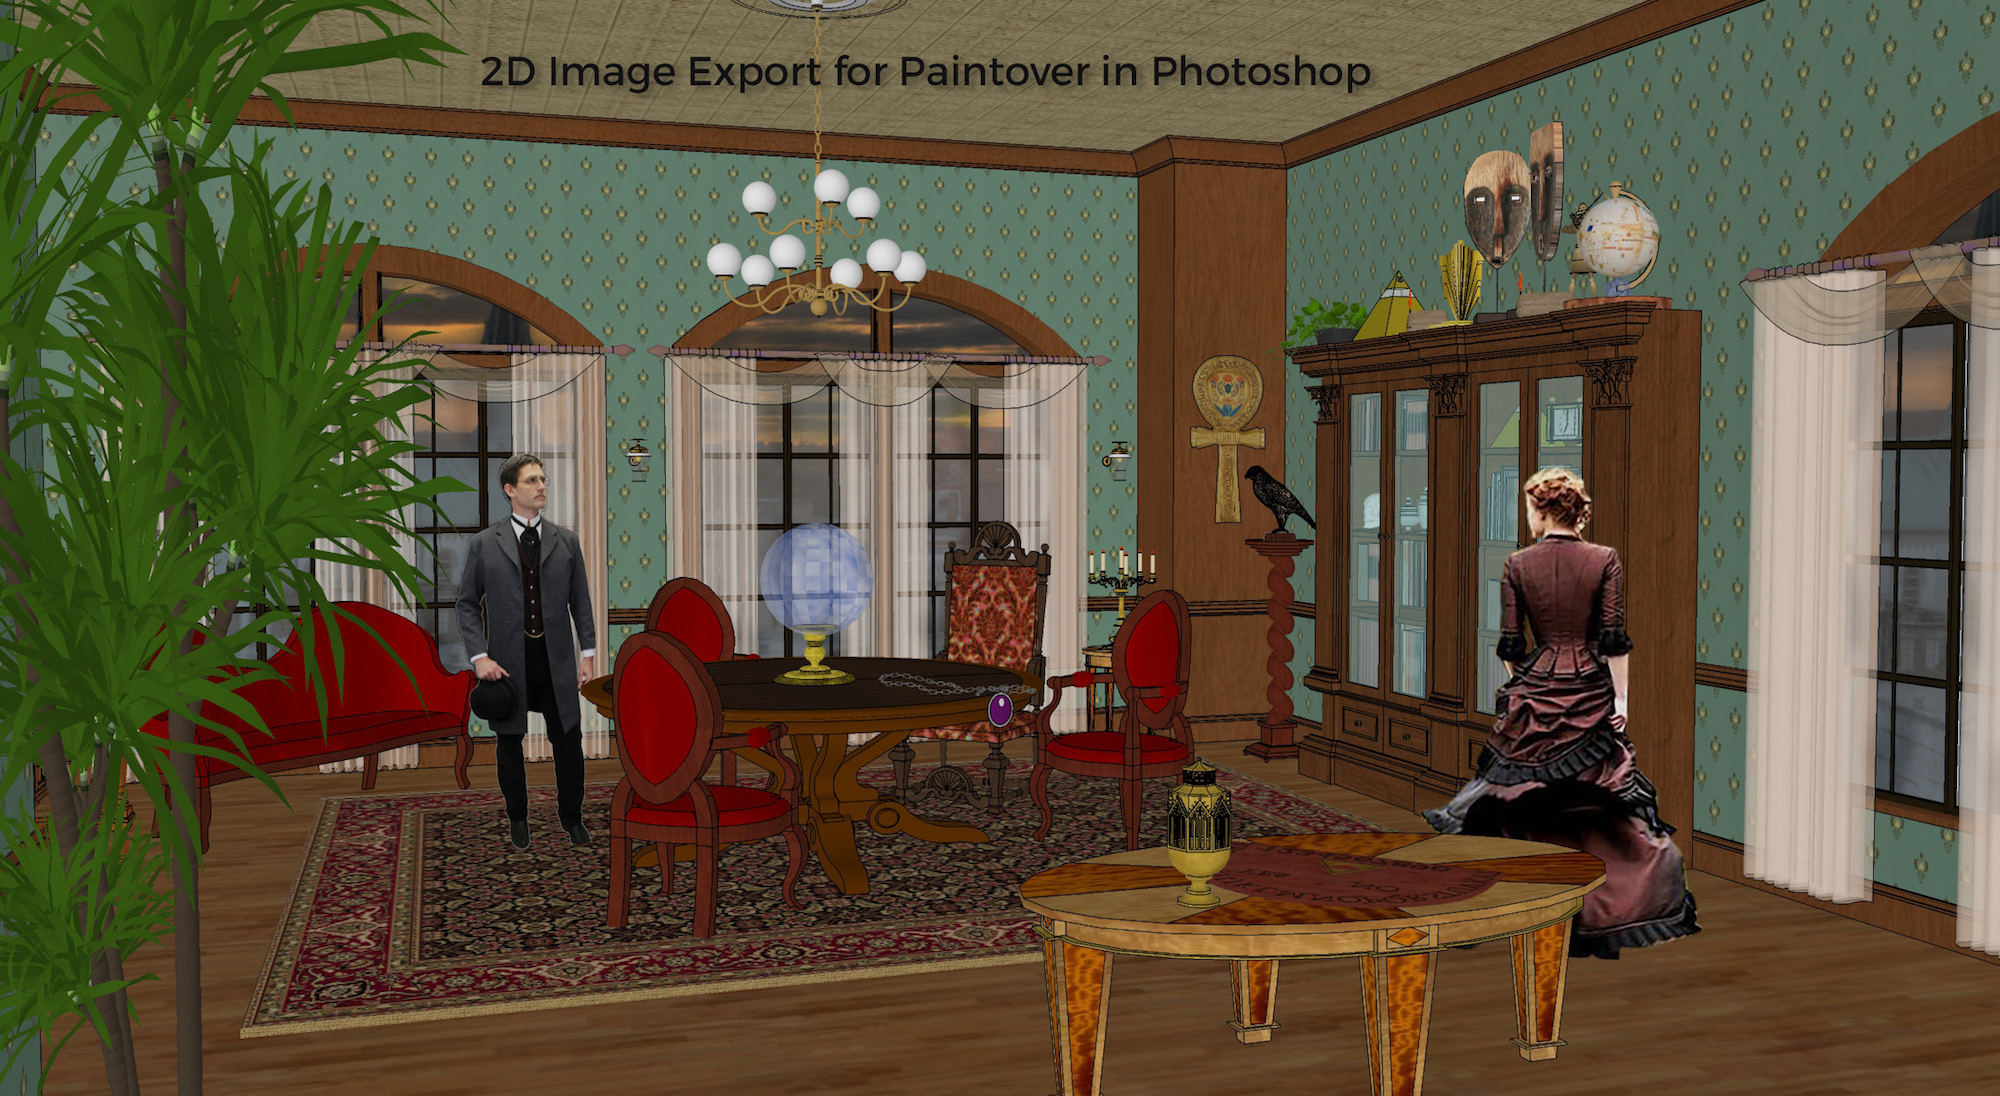 Victorian-Set-Design_2D-Export-for-Paintover_Nathan-Evans